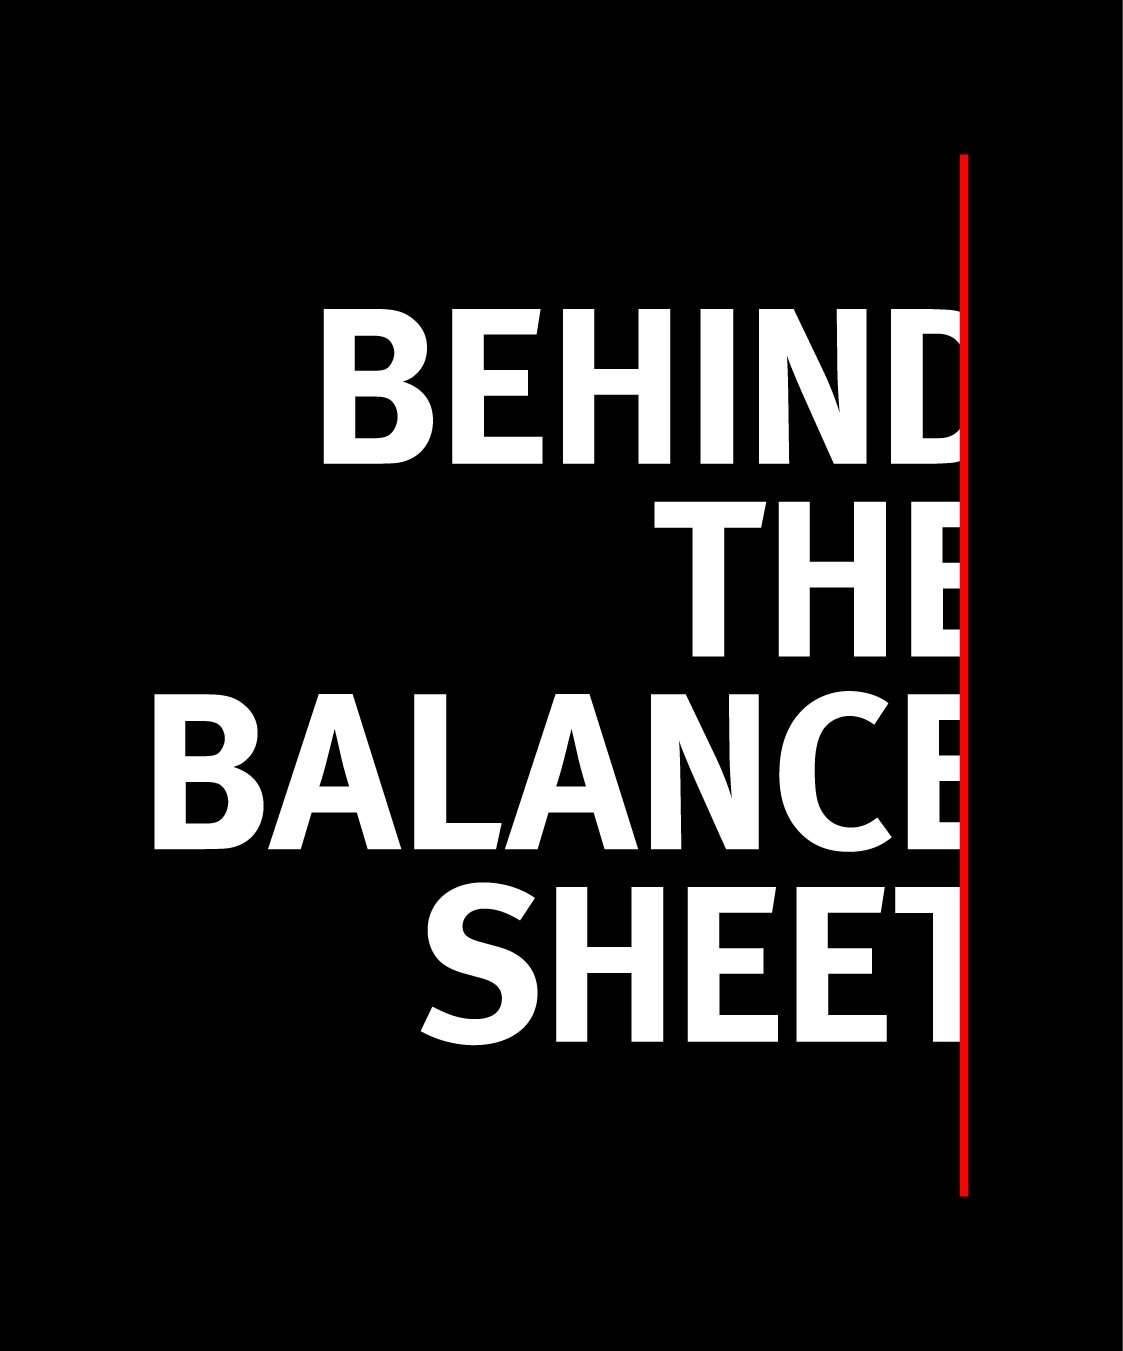 Behind The Balance Sheet